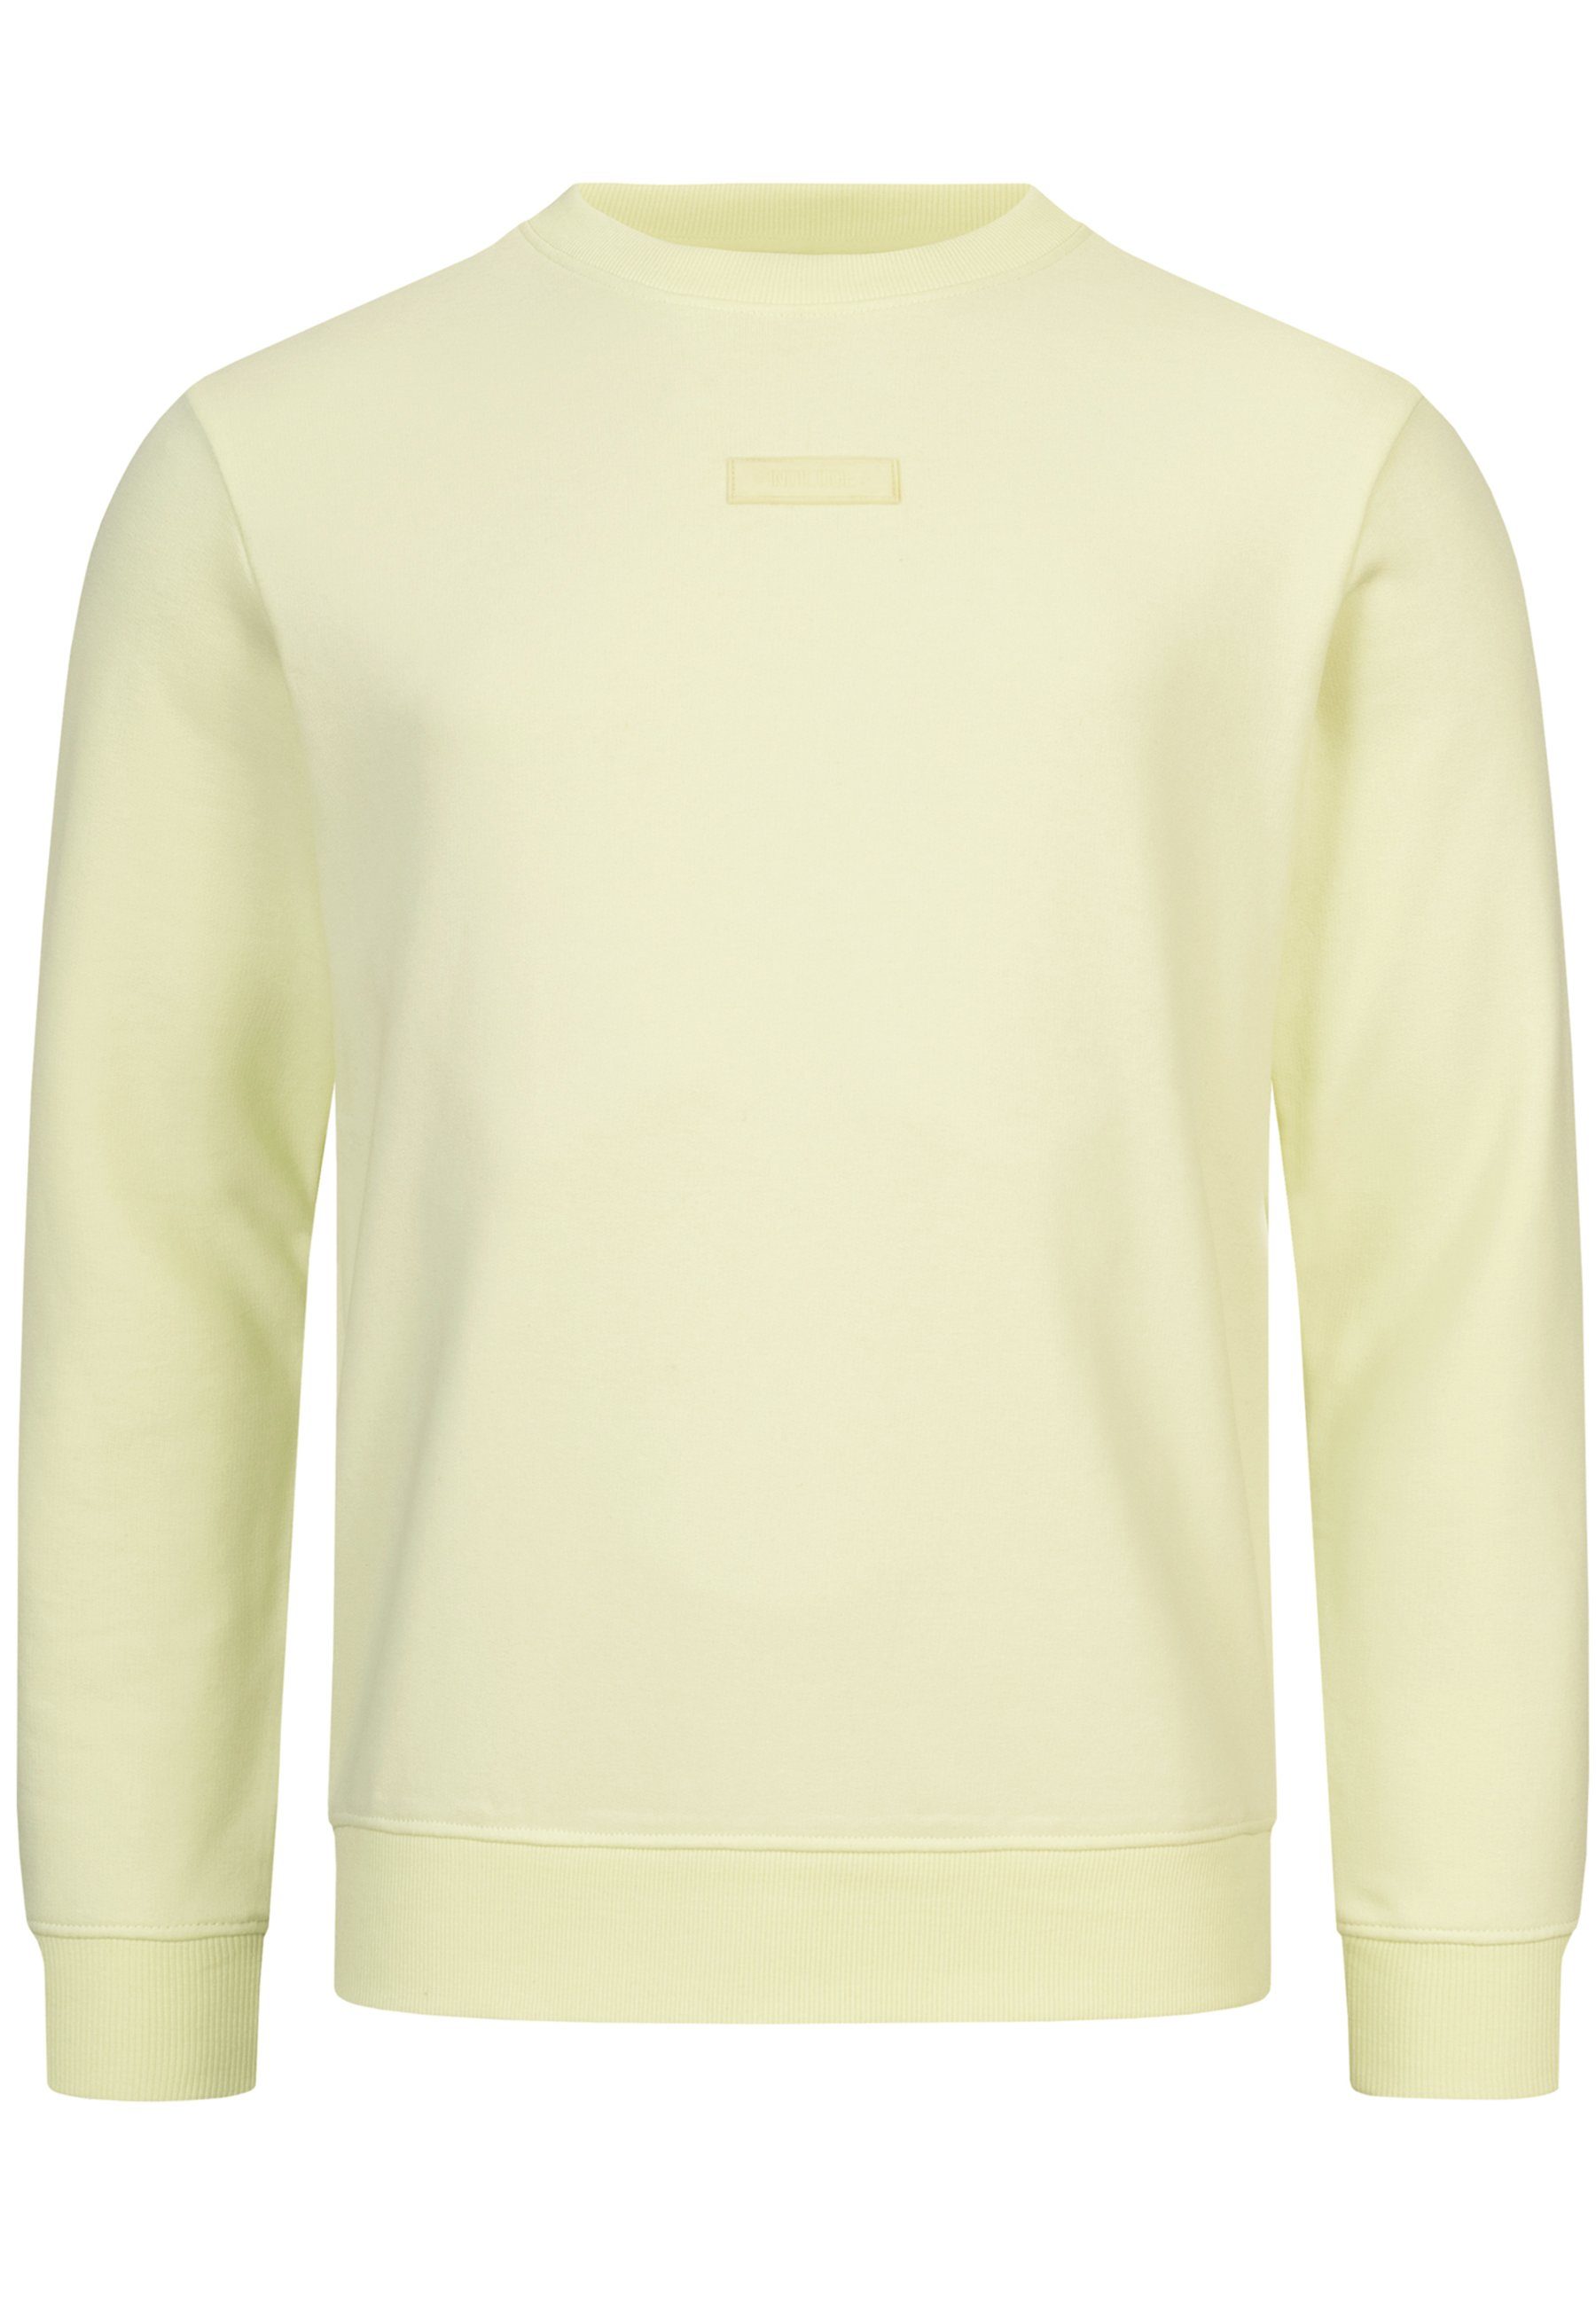 Indicode Sweater Baxter Lime Cream